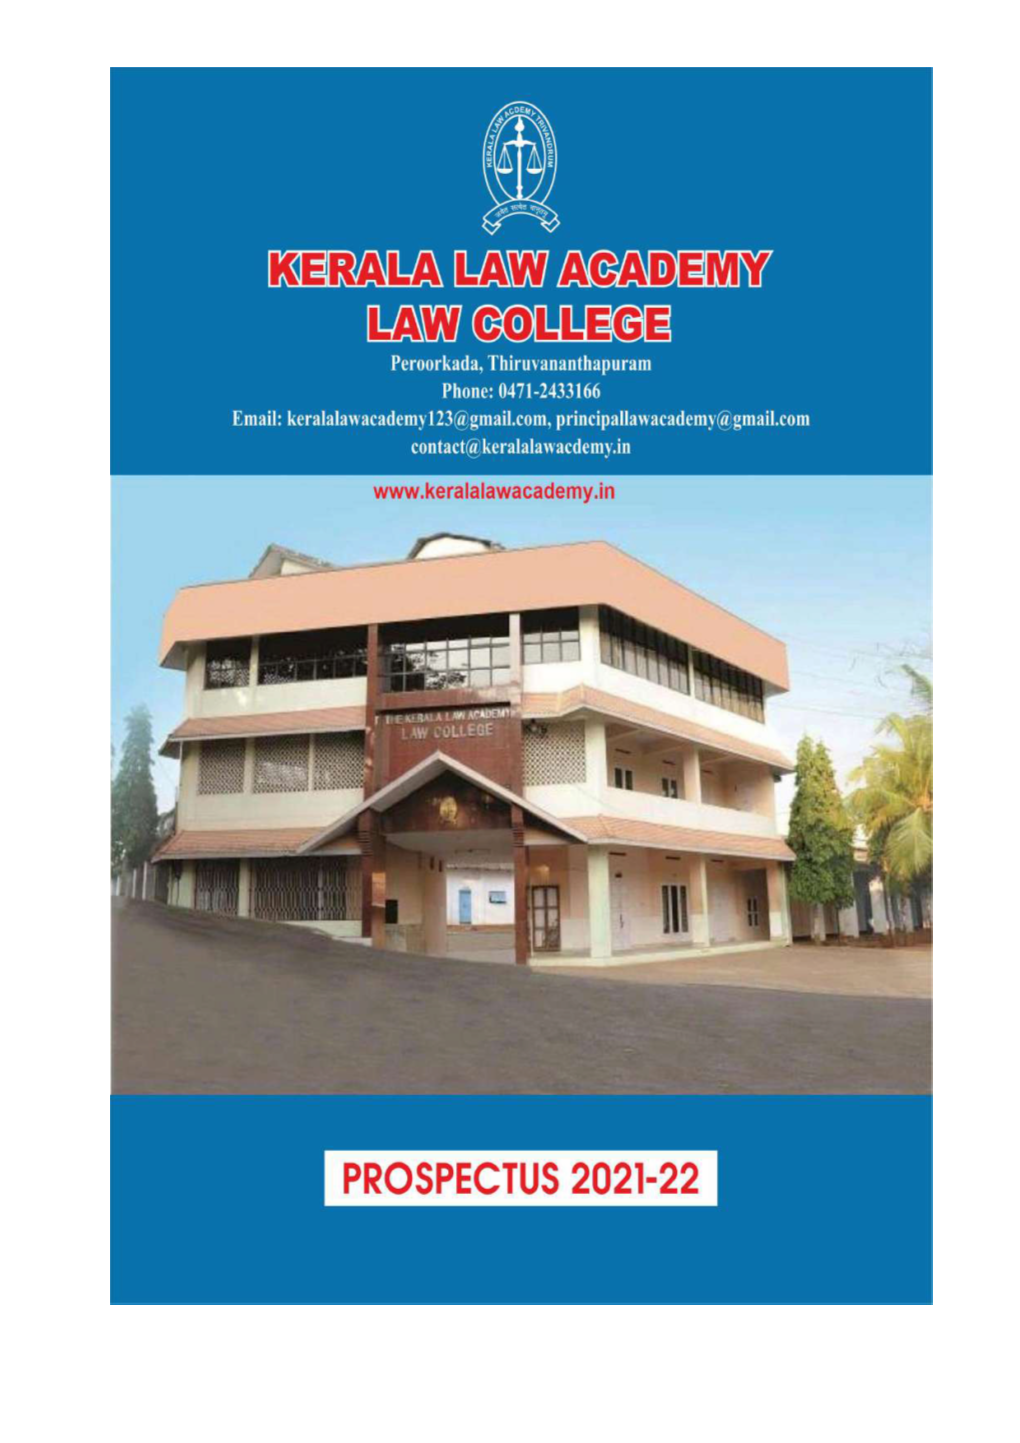 The Kerala Law Academy